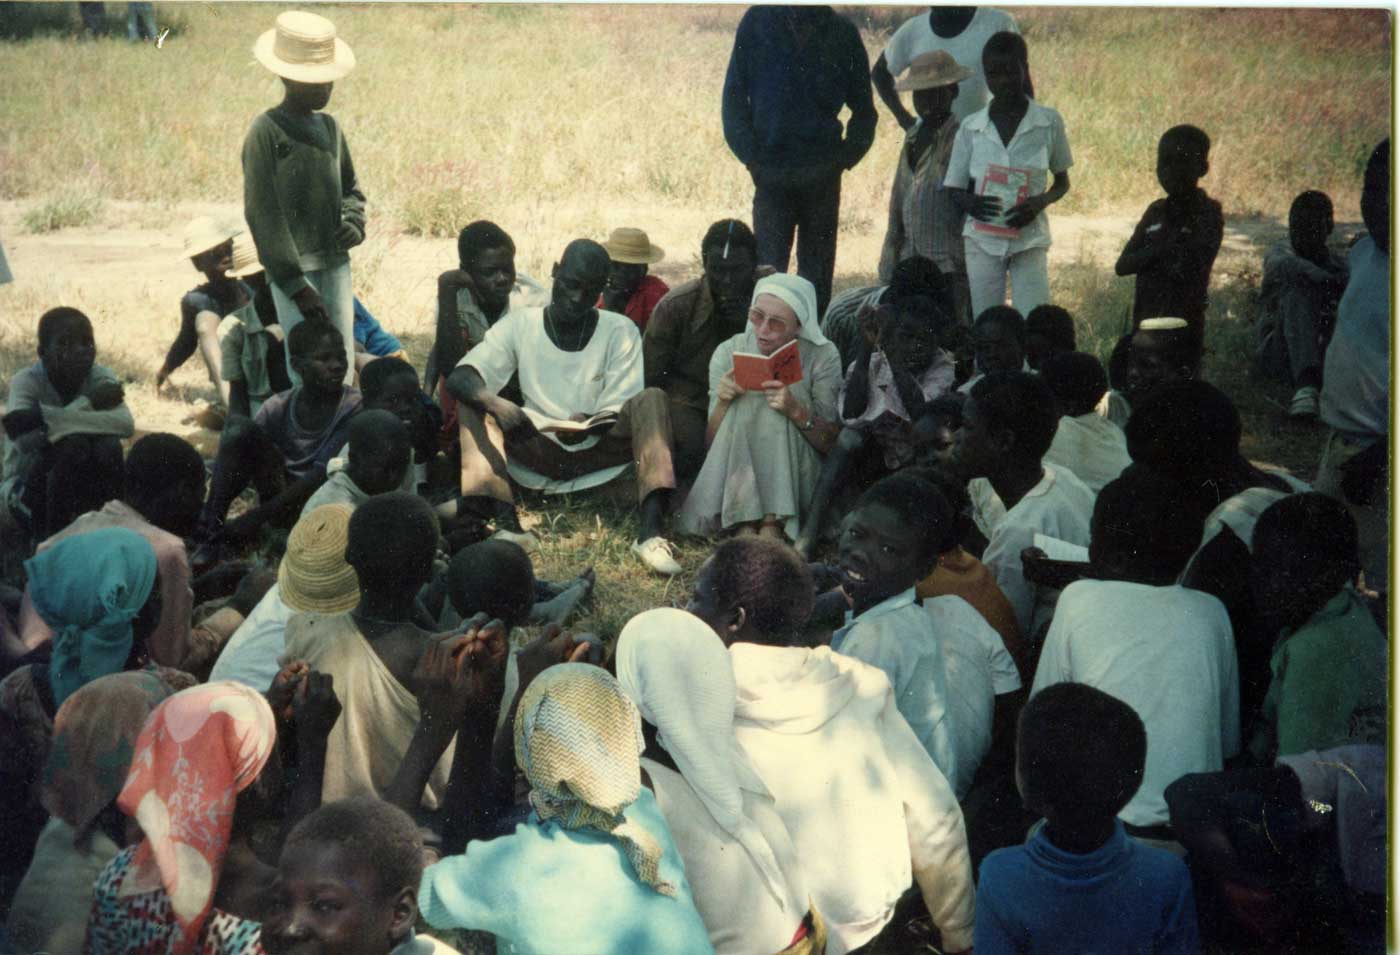 1986, Padermé – Camarões